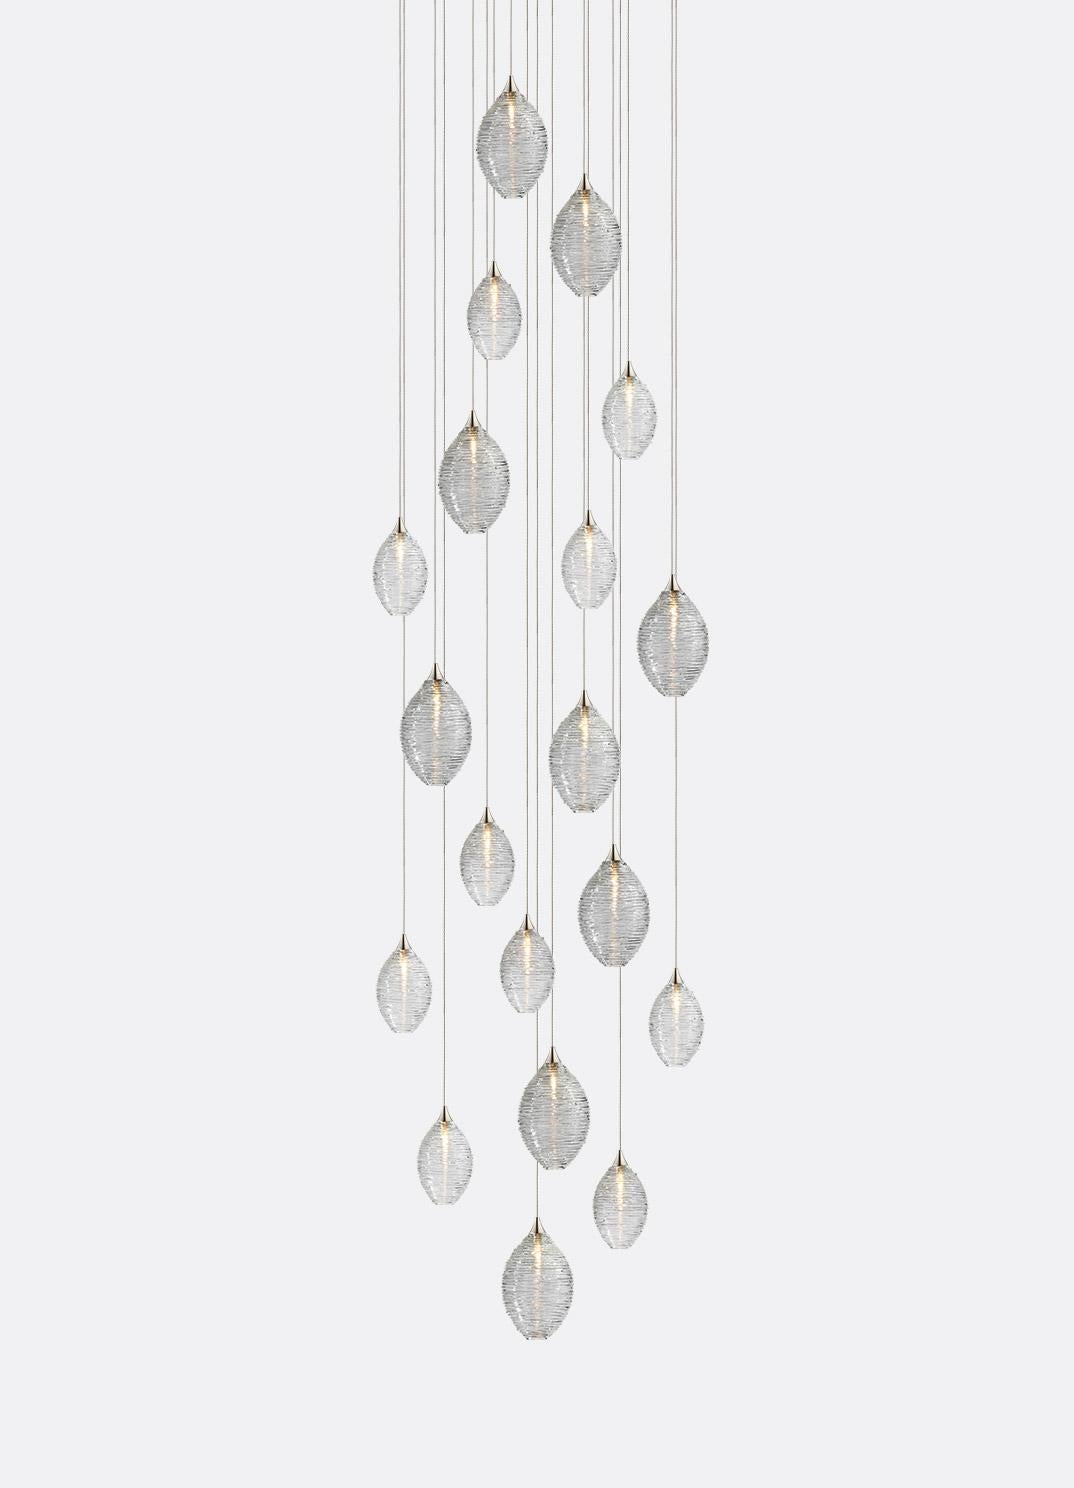 Hand blown glass pendants fixtures. 19 glass pendants on 30